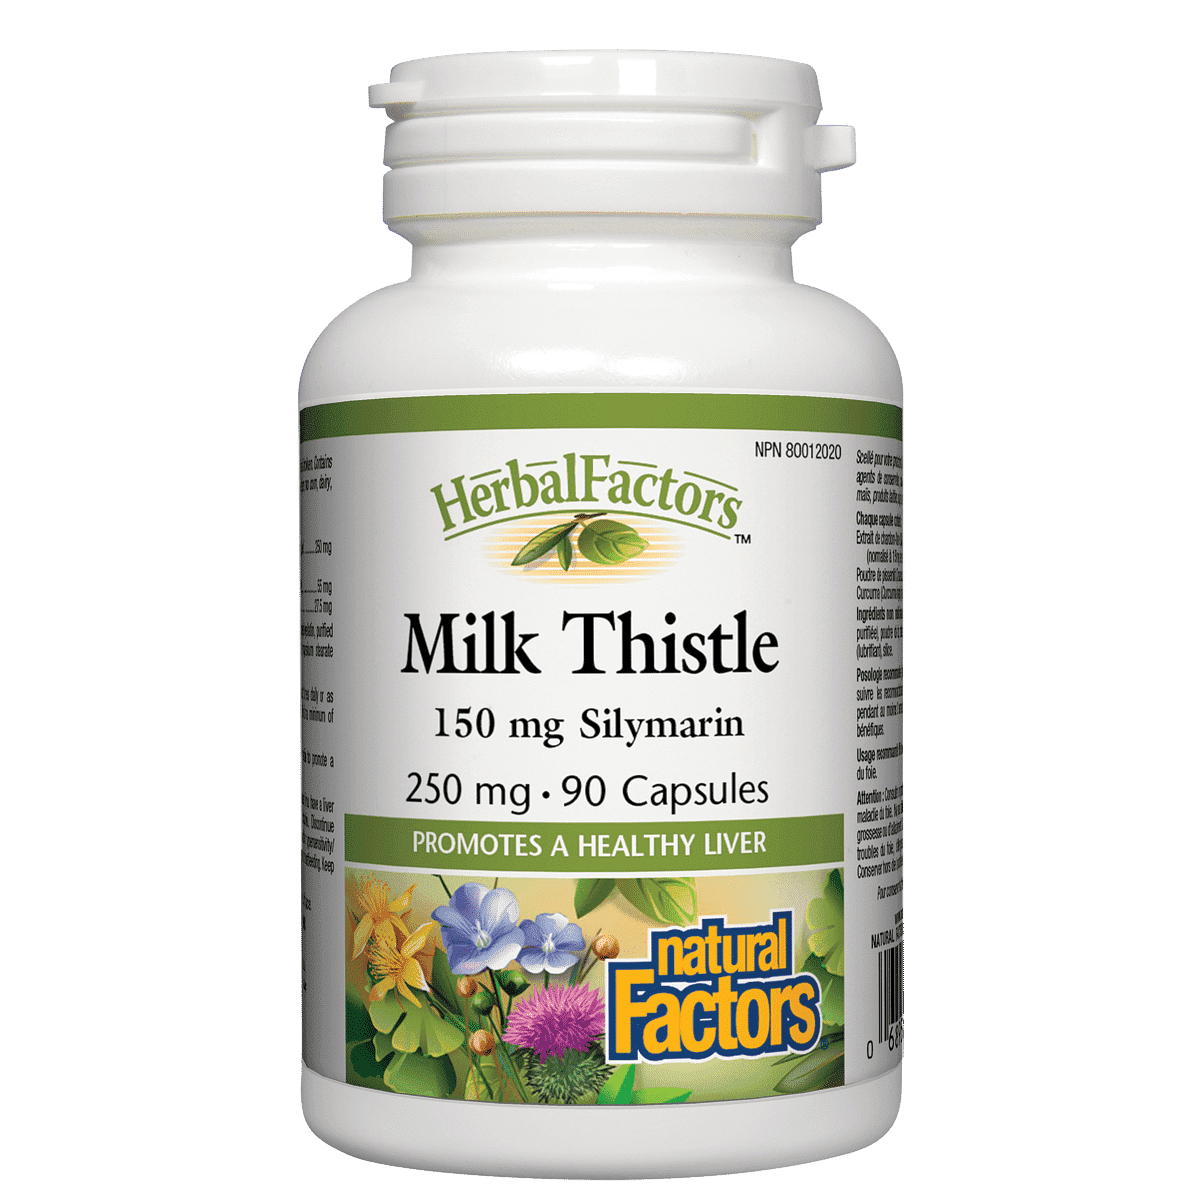 Natural Factors Milk Thistle - 150 mg Silymarin 90 Capsules